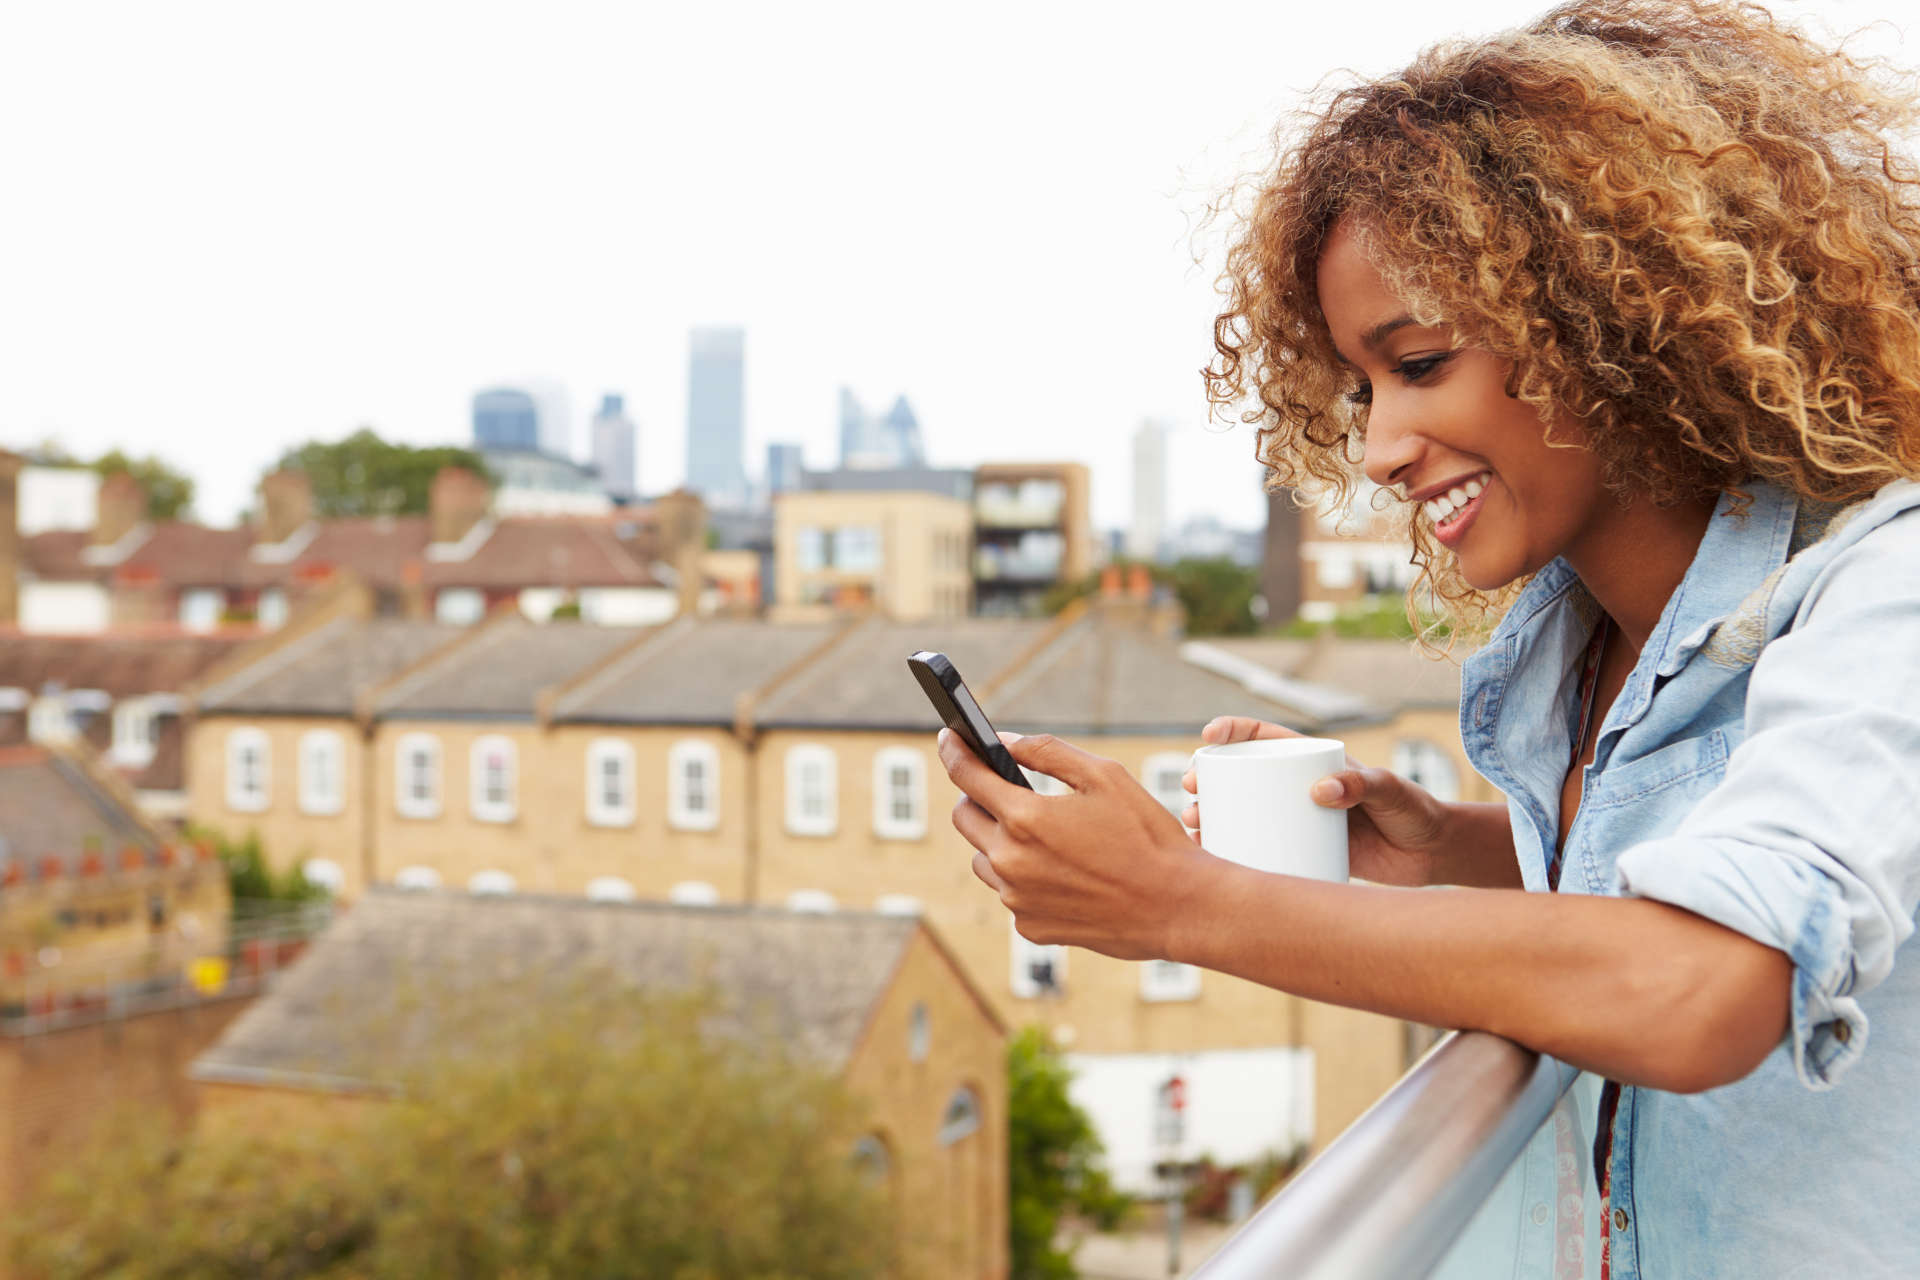 Motivational Text Messaging App Shine Raises $2.5 million to Improve Happiness and Motivation